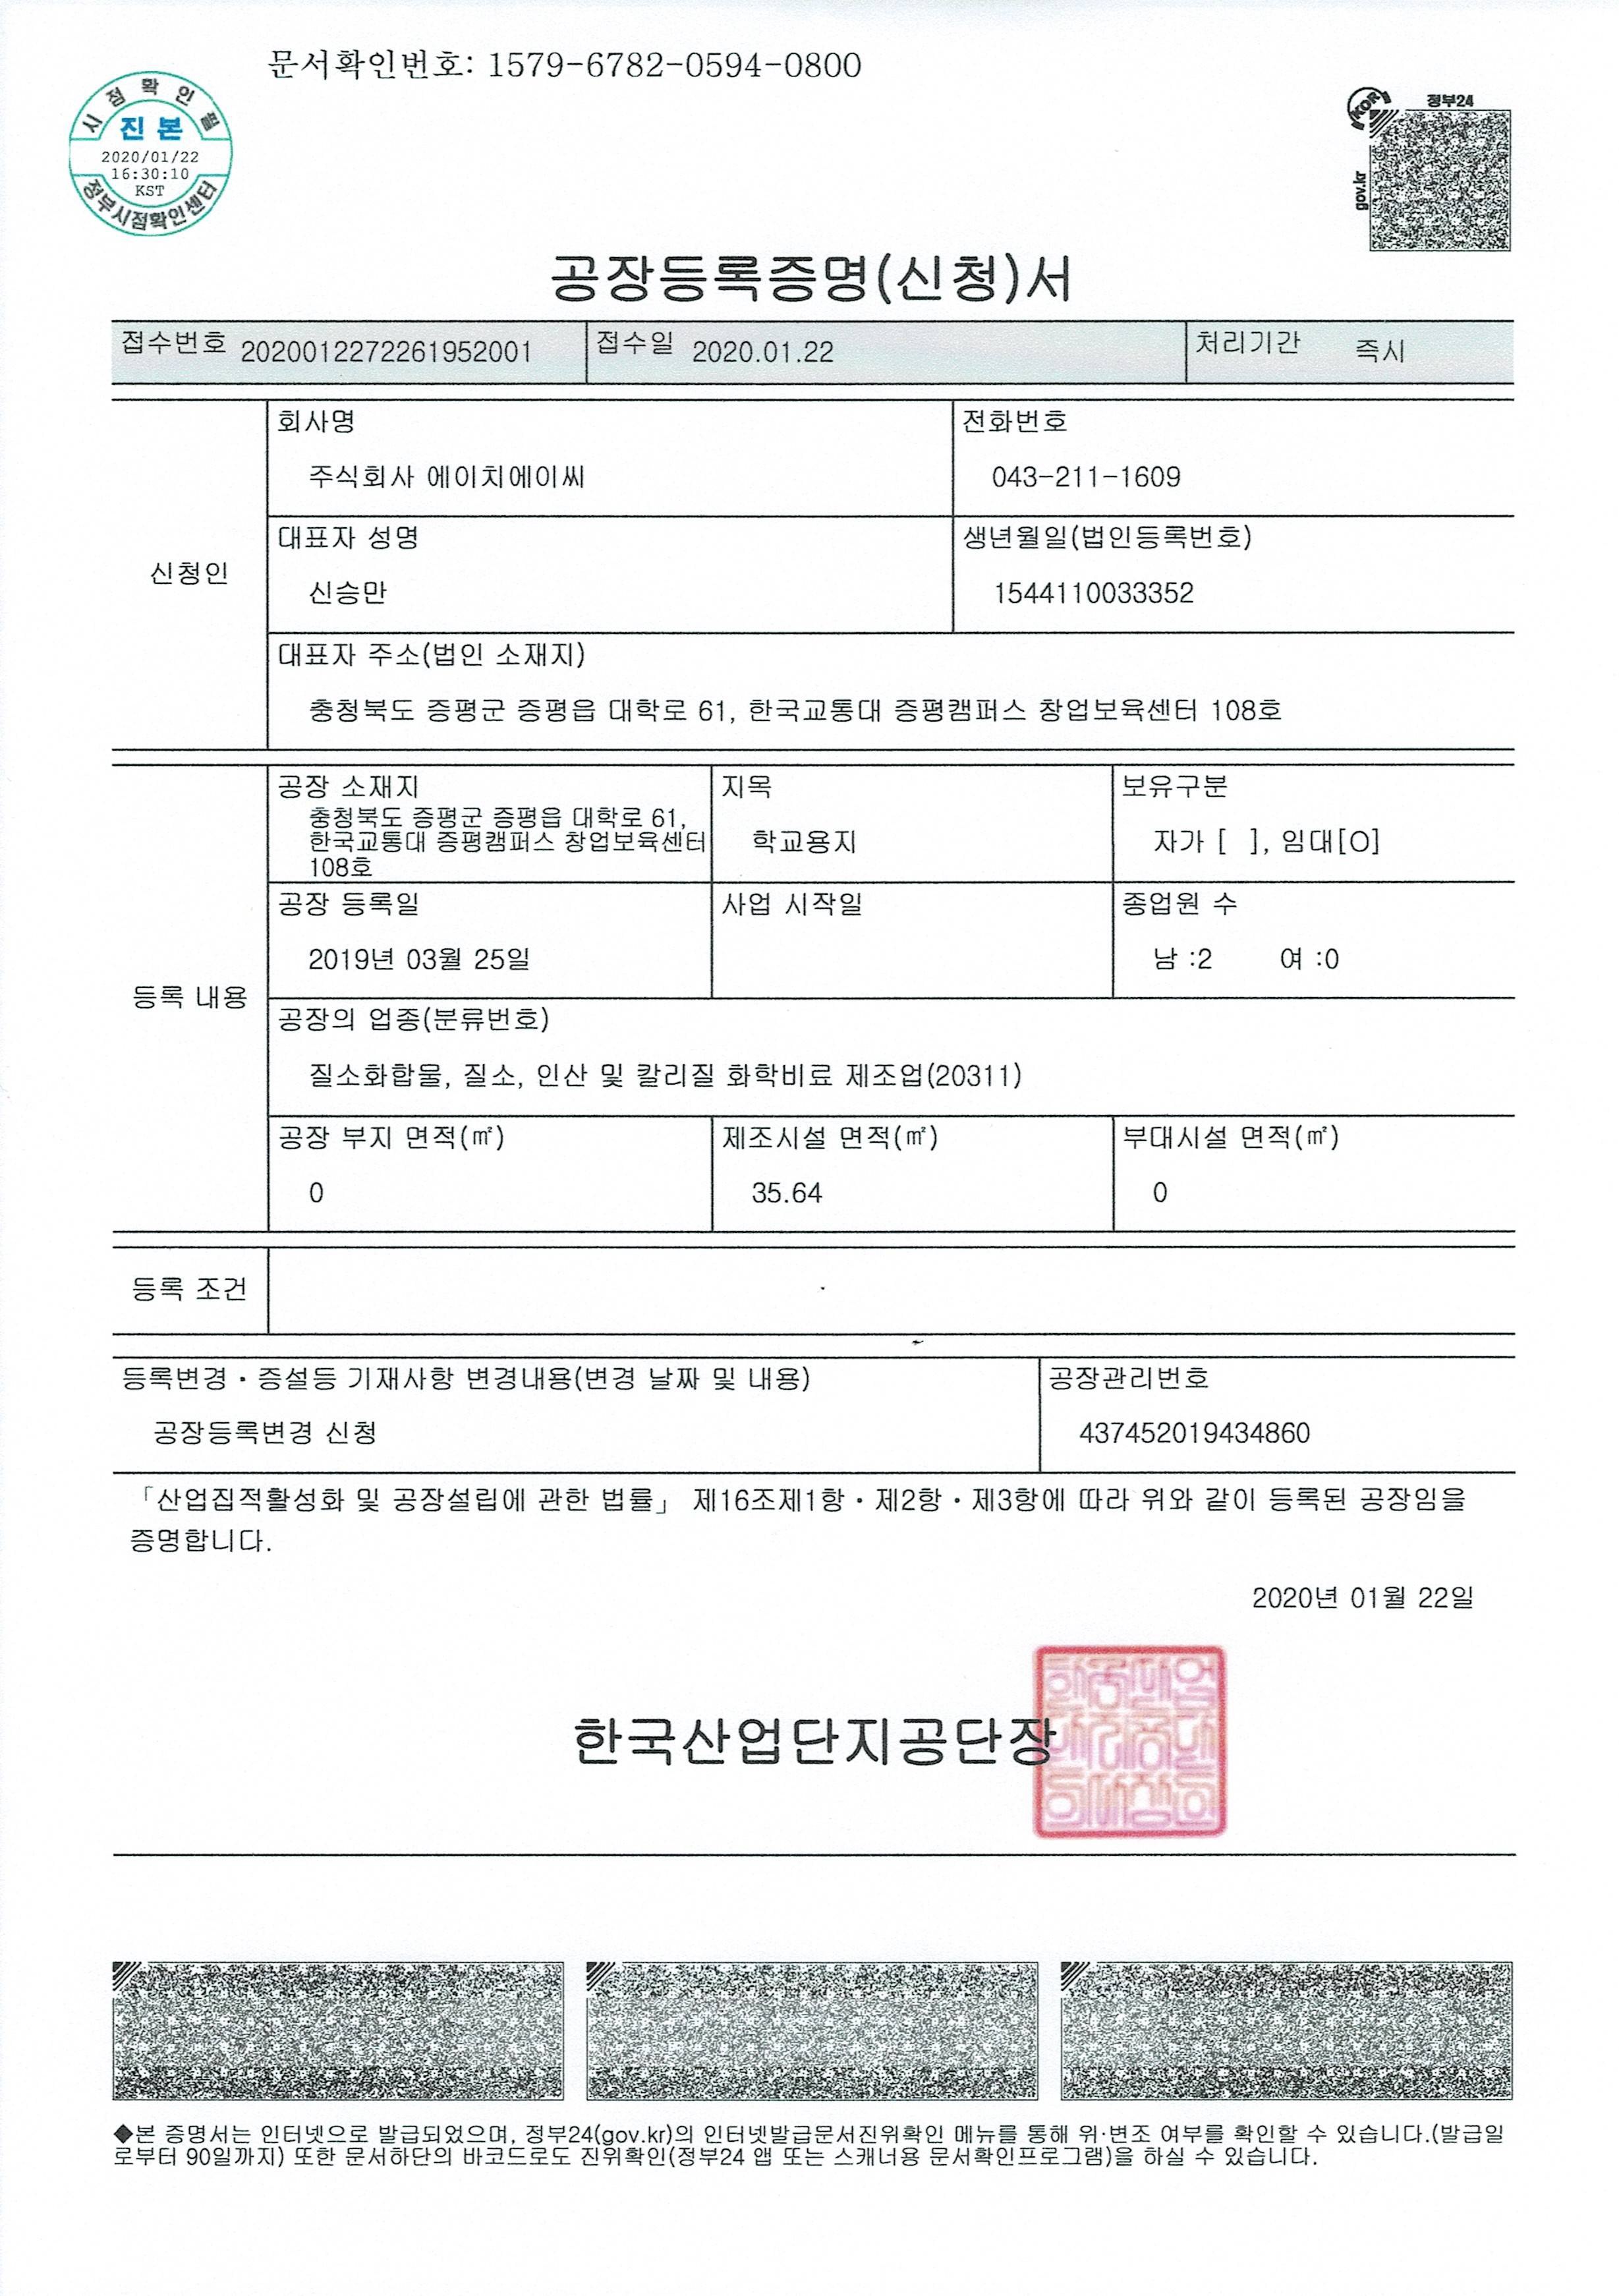 Factory registration certificate [첨부 이미지1]